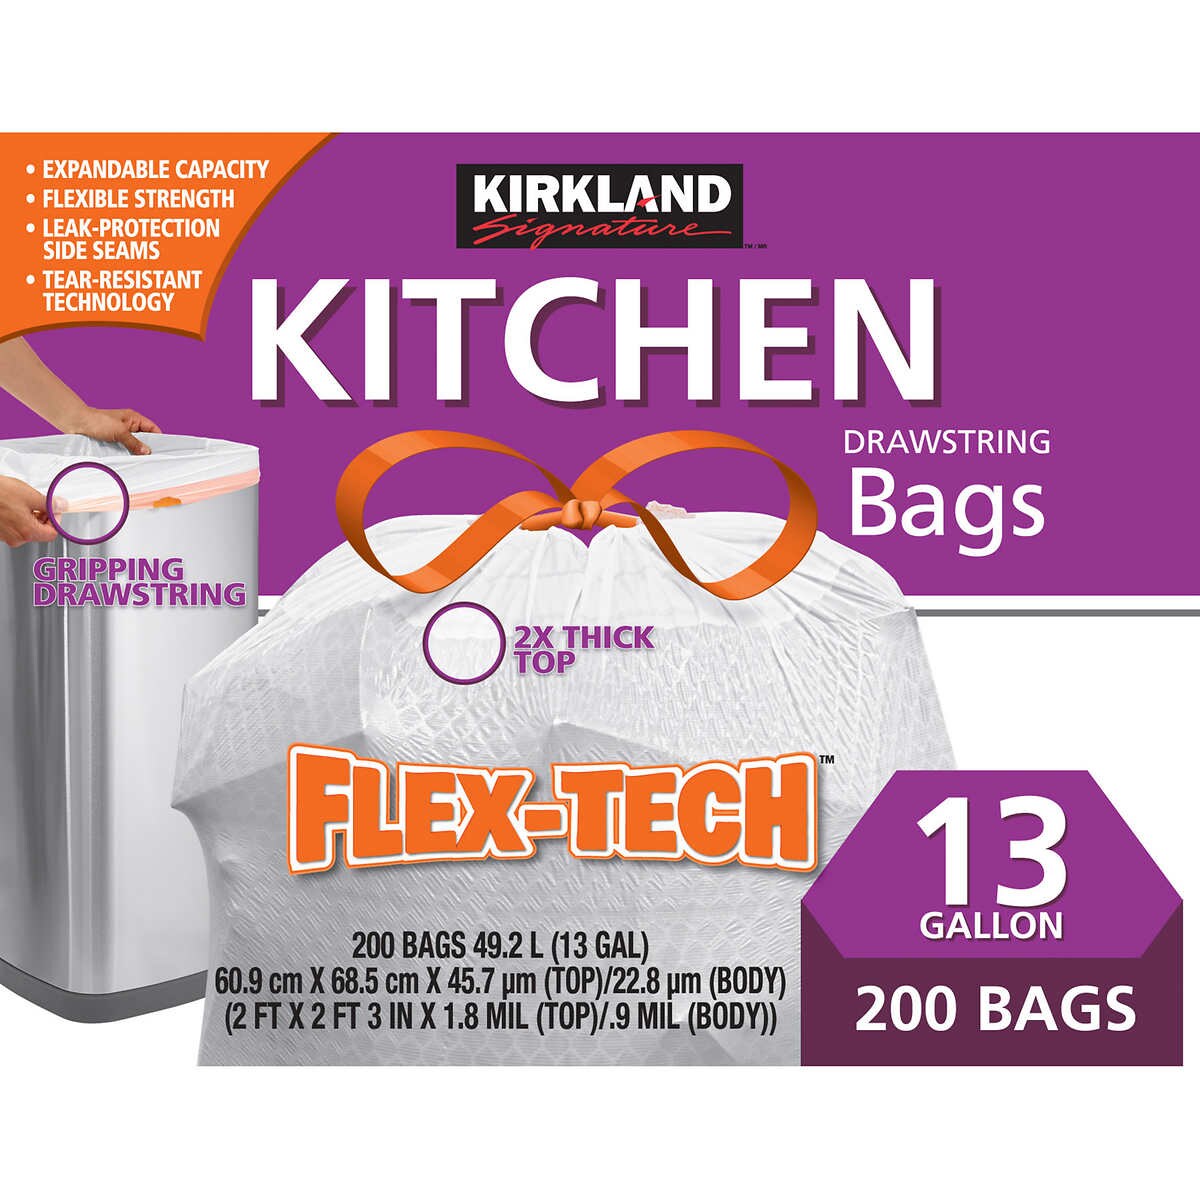 Kirkland Signature 18-Gallon Compactor & Kitchen Trash Bag, 70-count